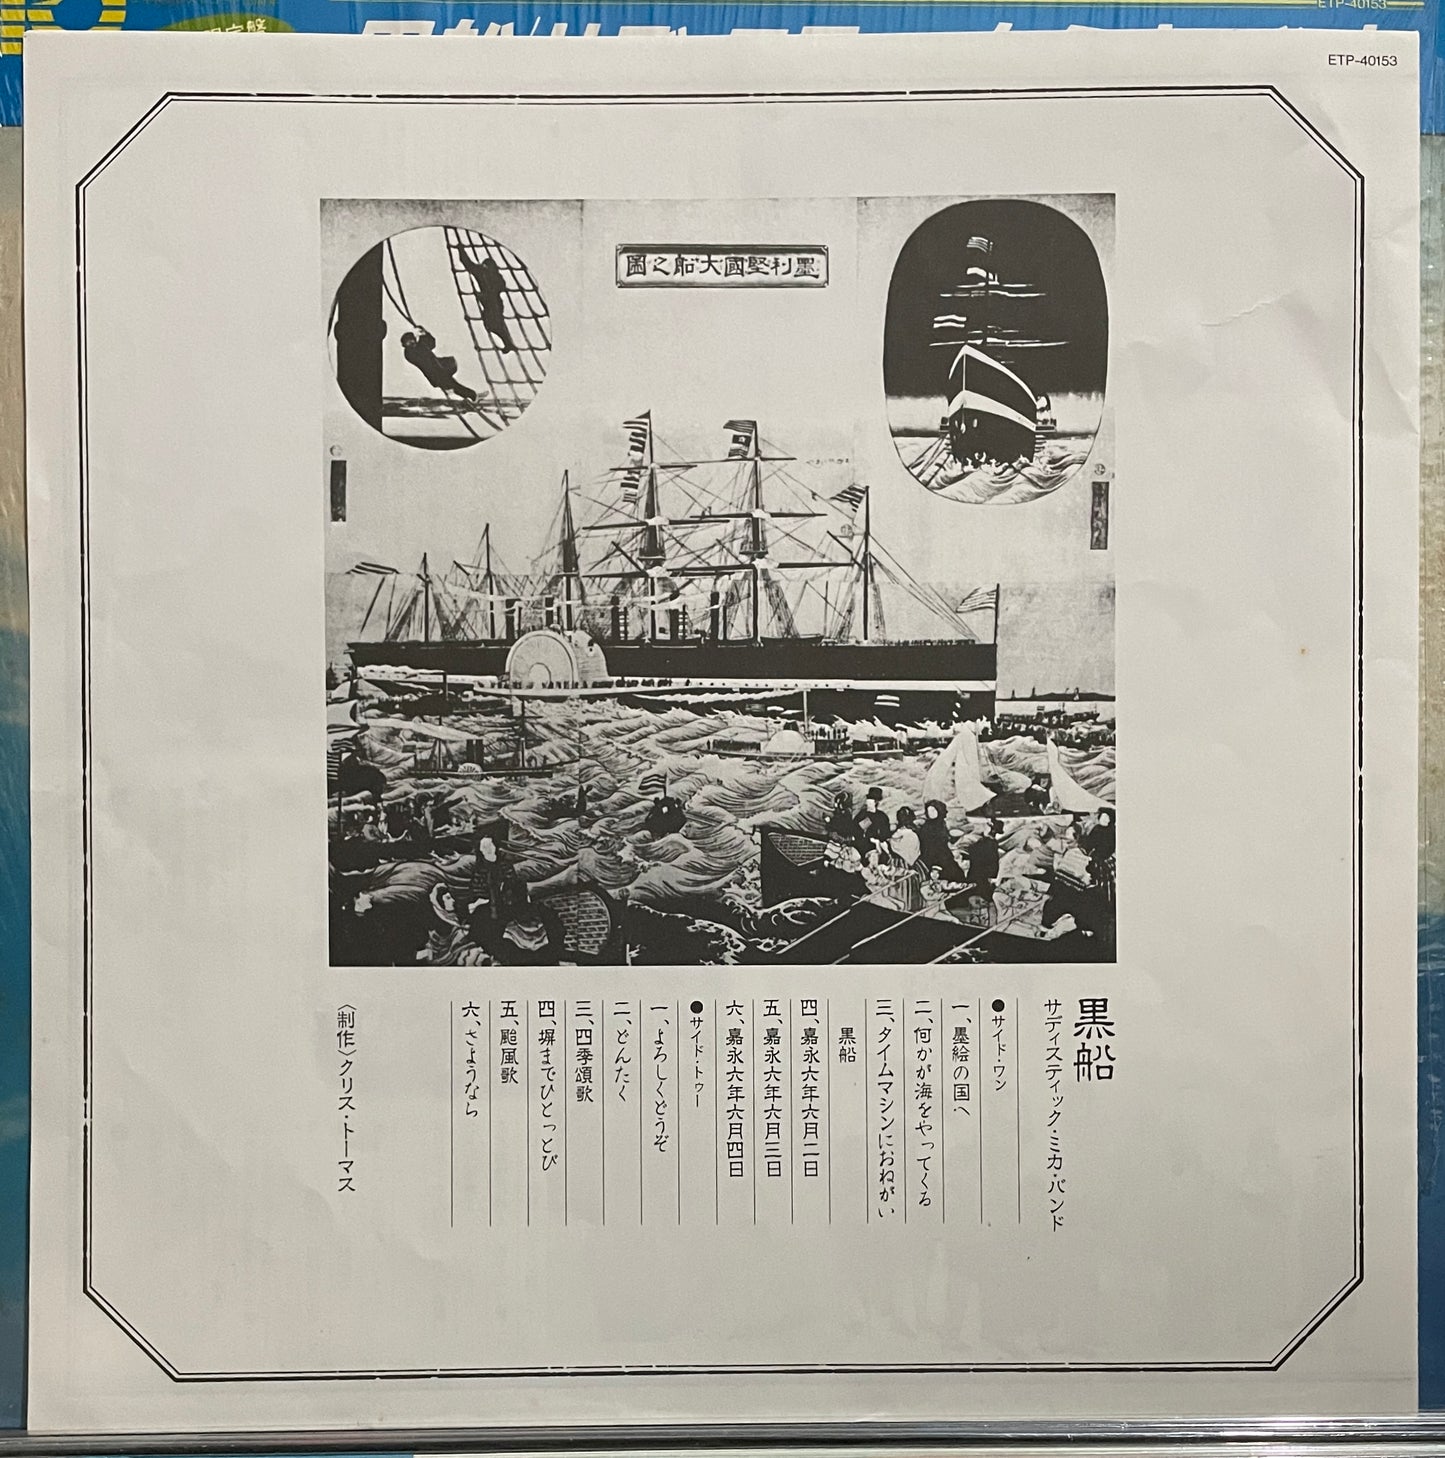 Sadistic Mika Band “Black Ship” (1974)